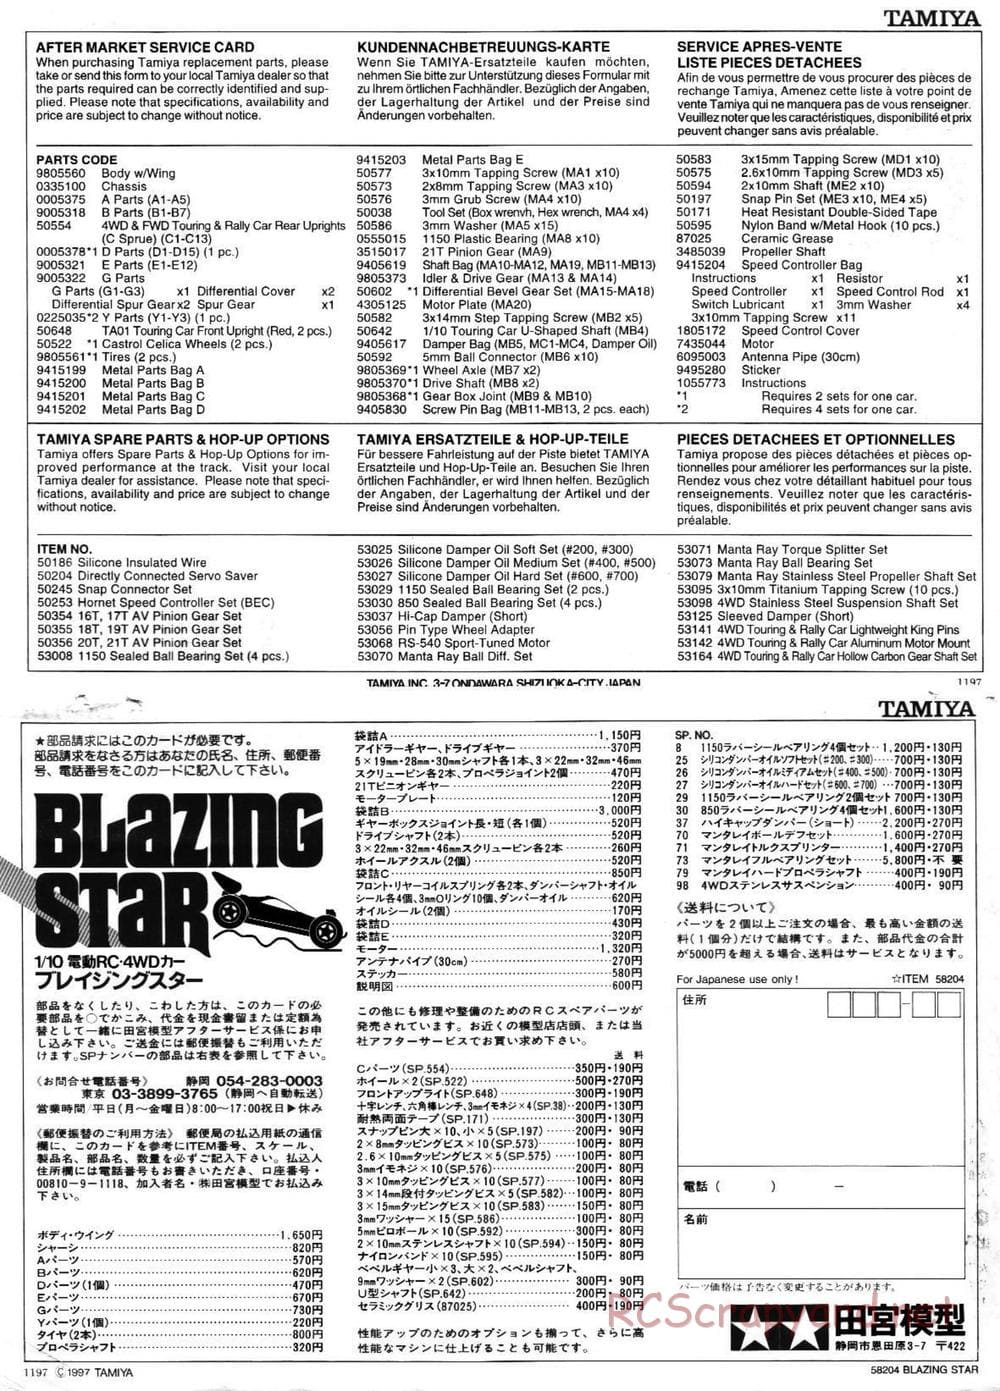 Tamiya - Blazing Star Chassis - Manual - Page 25